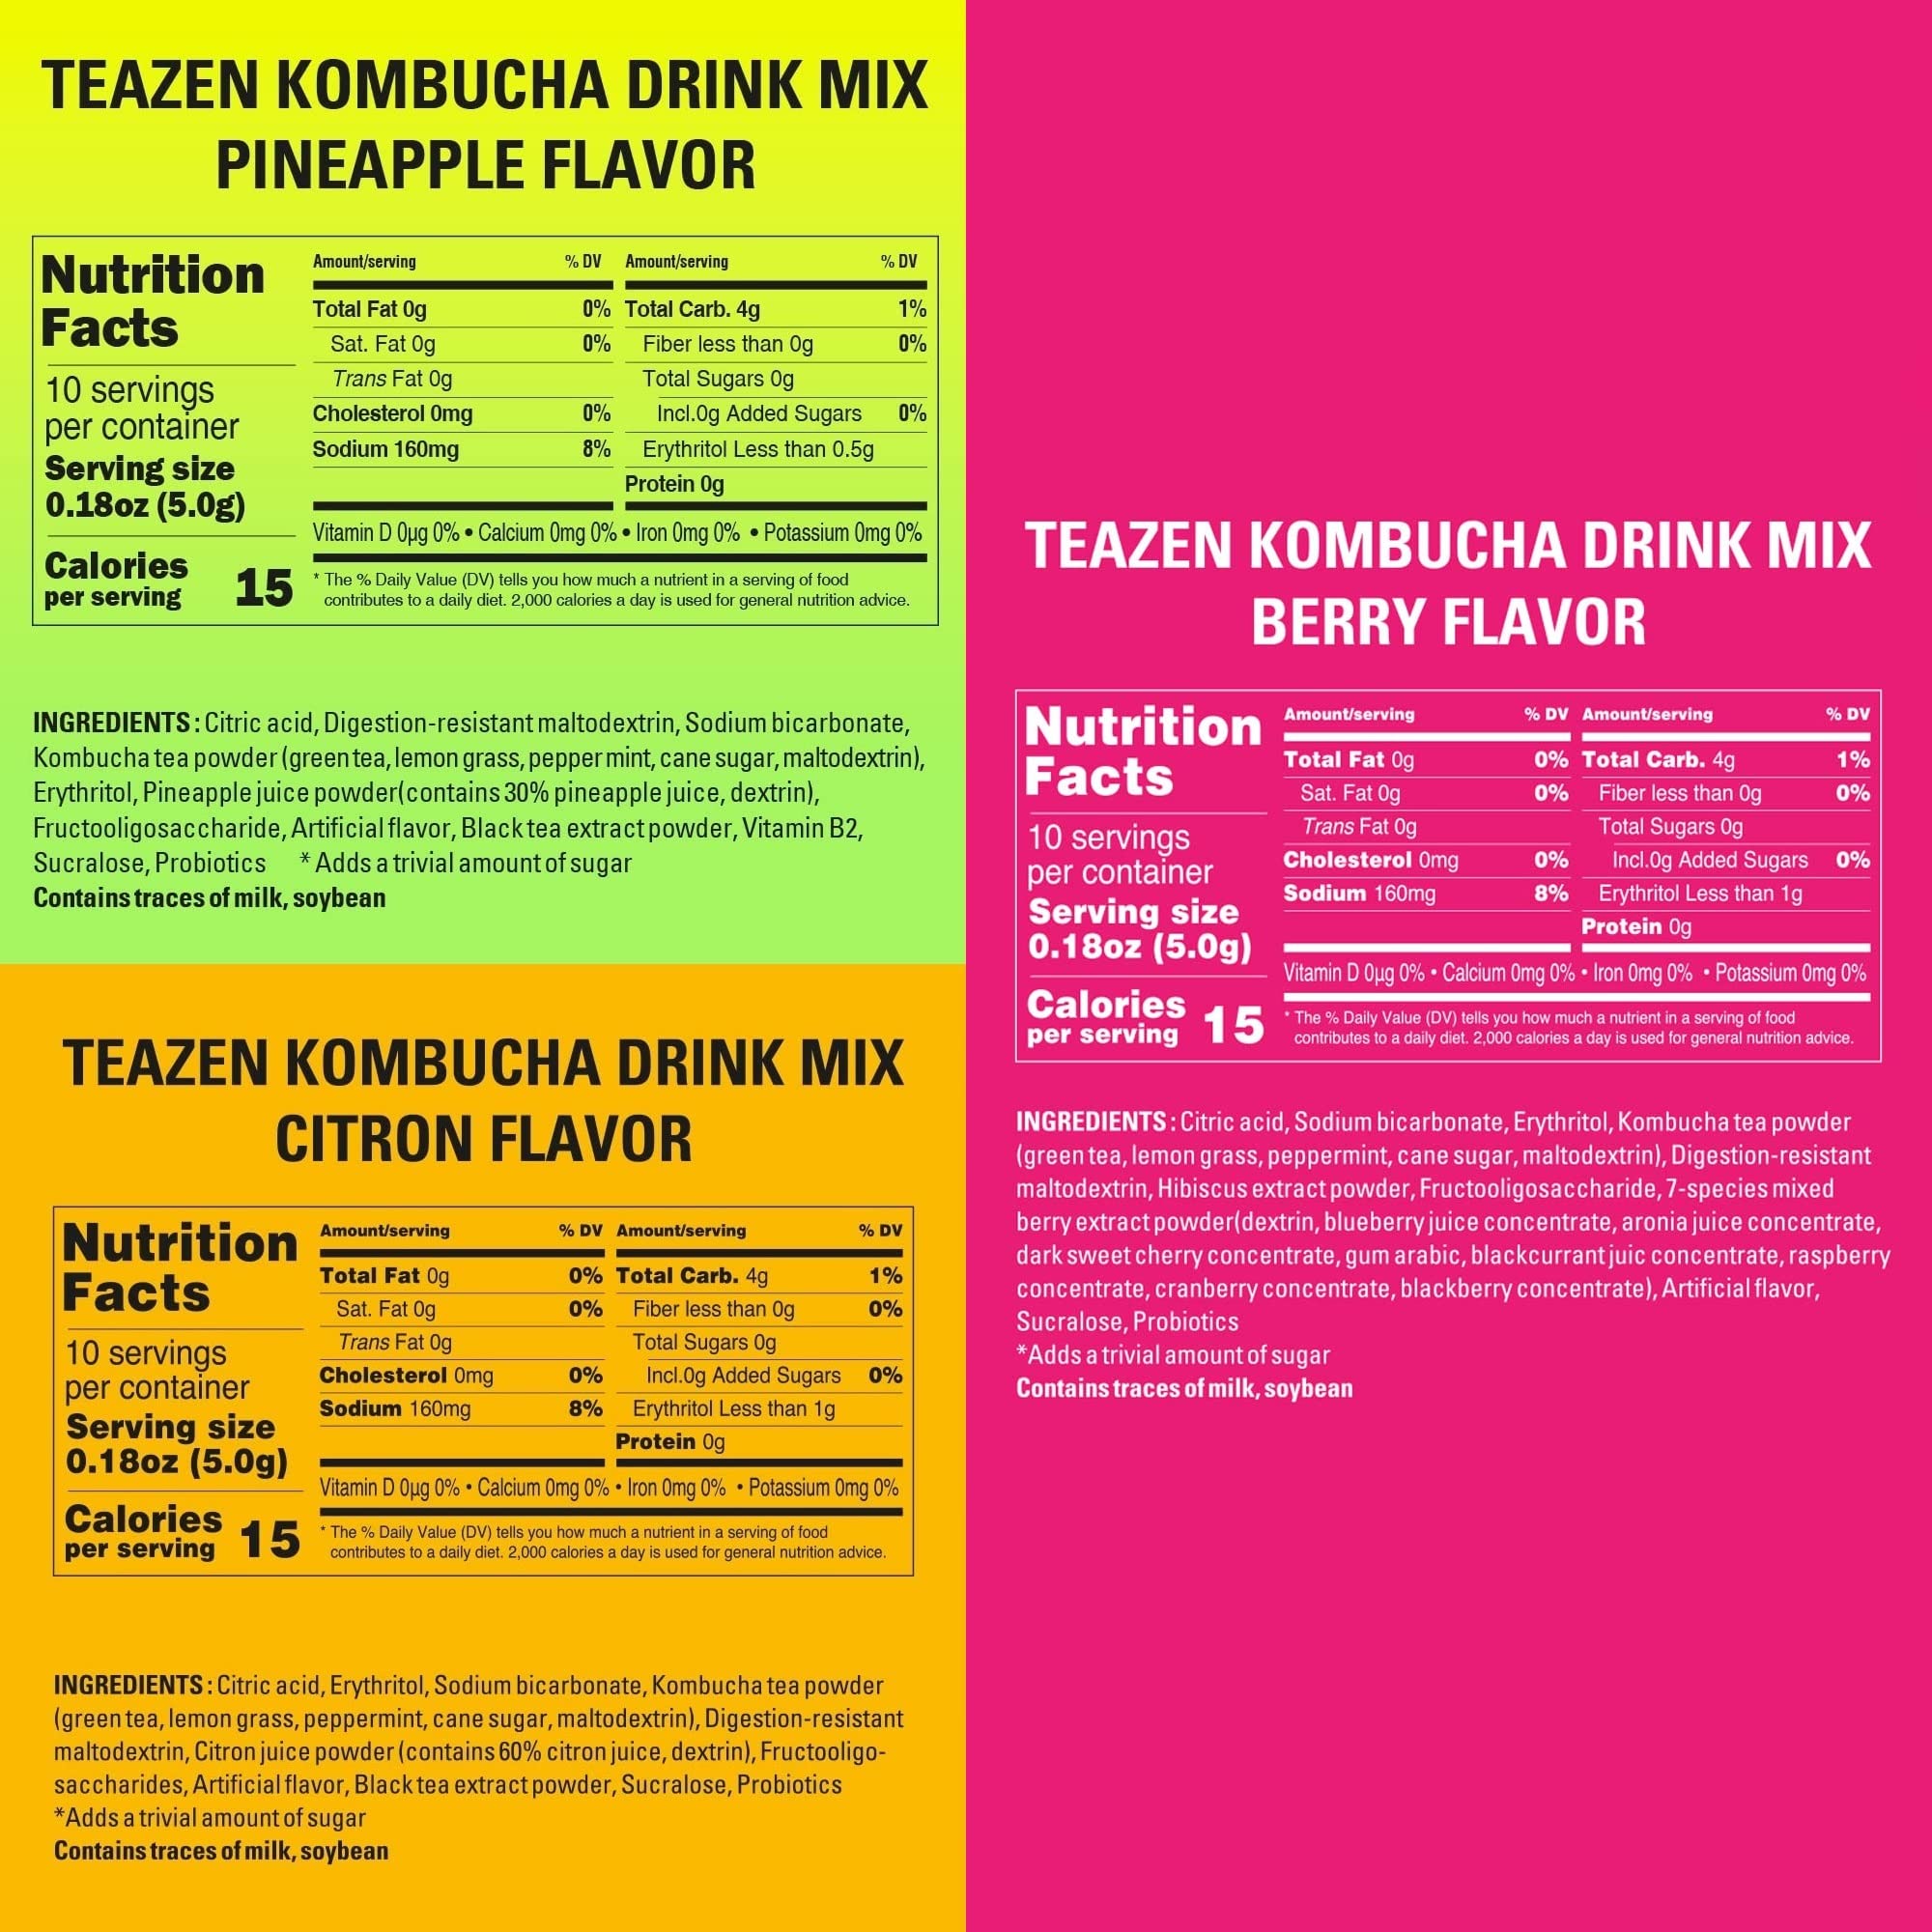 TEAZEN 5 Flavors 50 sticks Variety Pack, Kombucha Peach, Pineapple, Lemon, Citrus, Berry flavor (8.8oz, 50 Sticks)